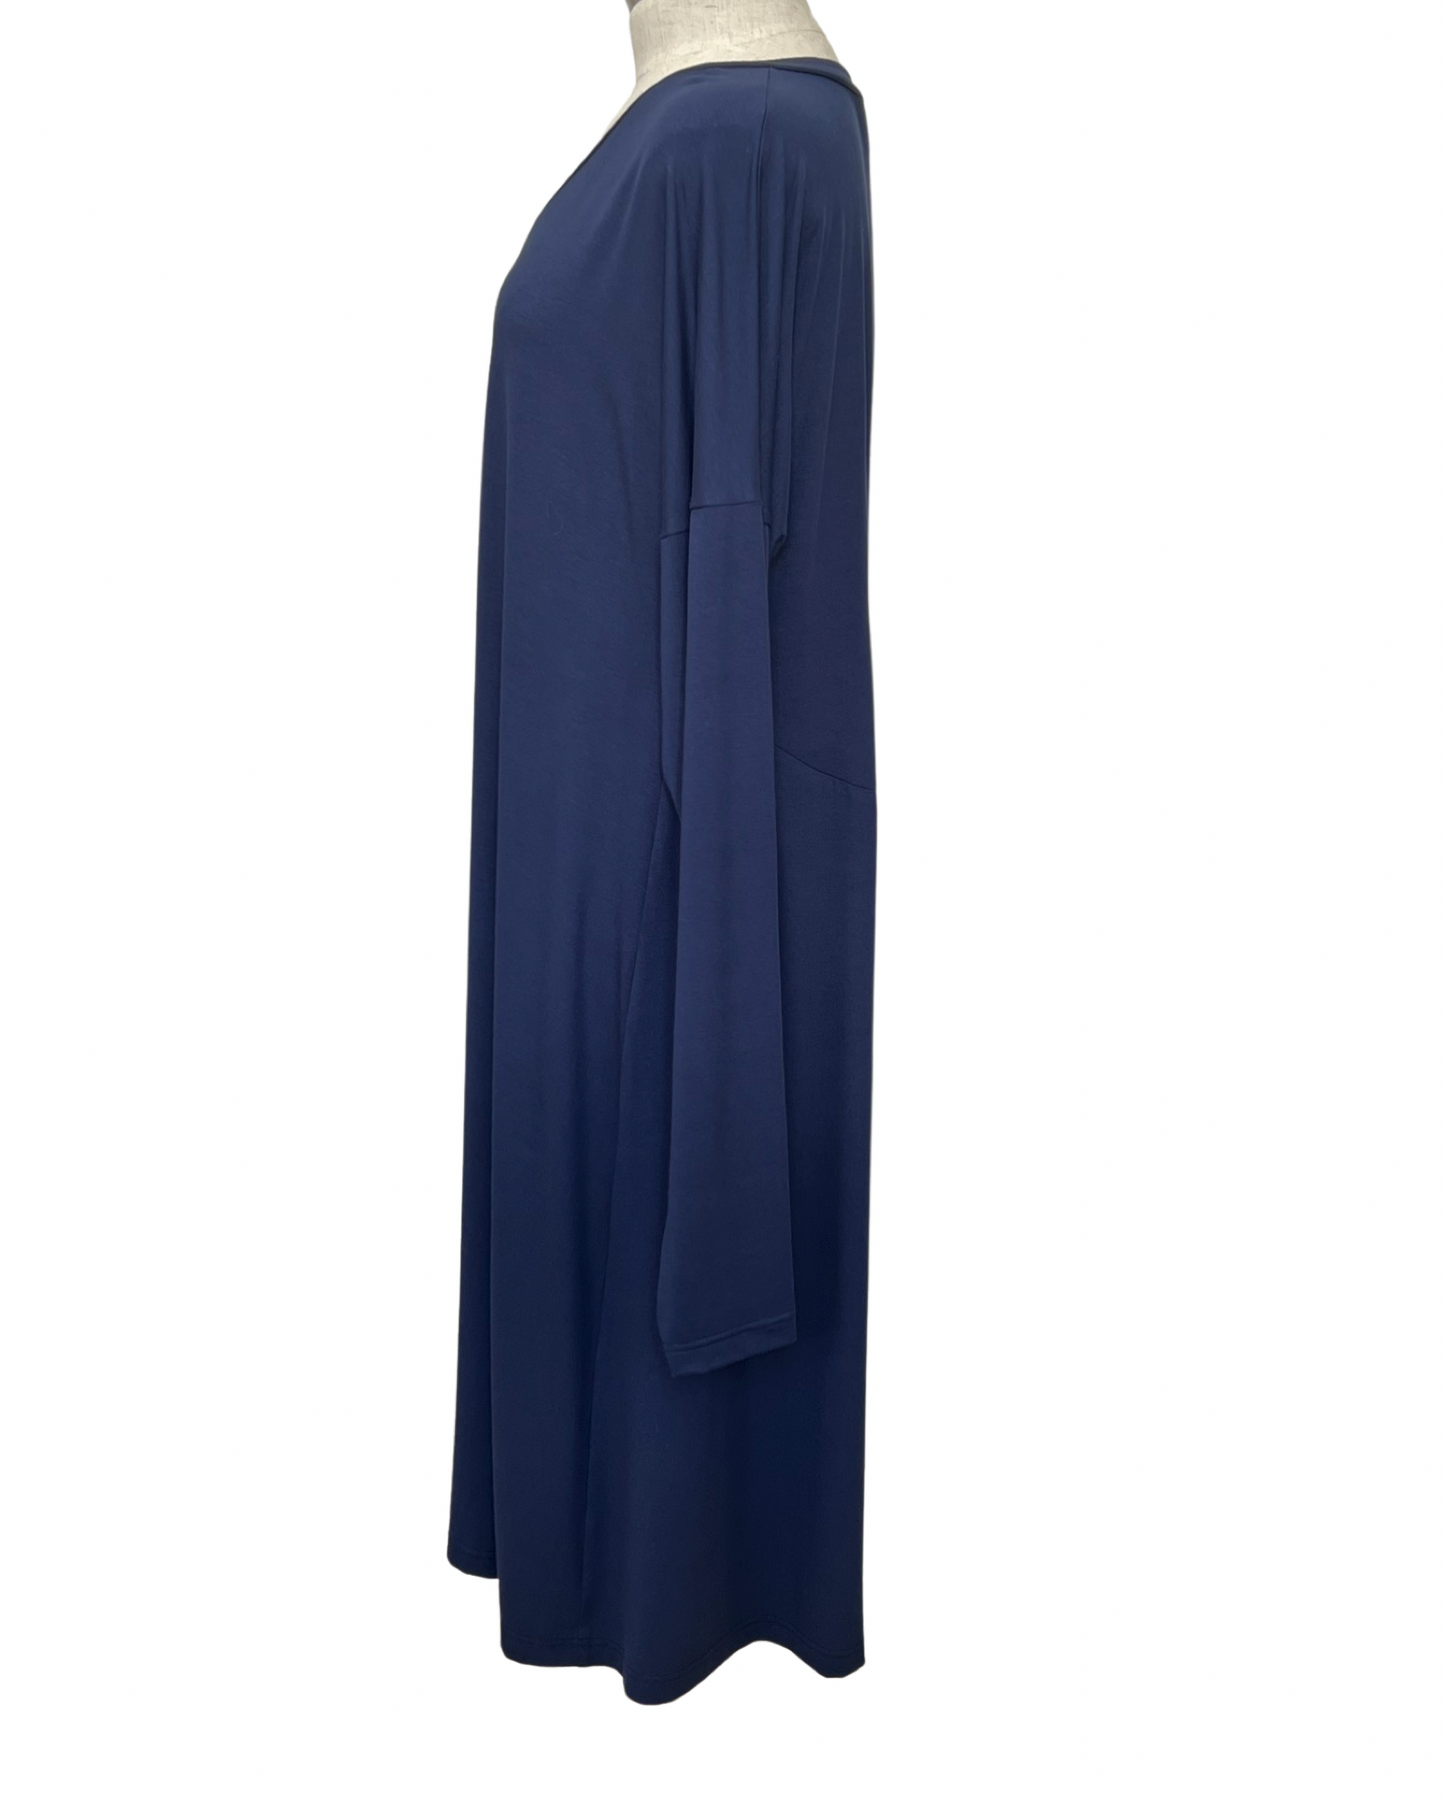 Victoria Dress - Navy - Size 16